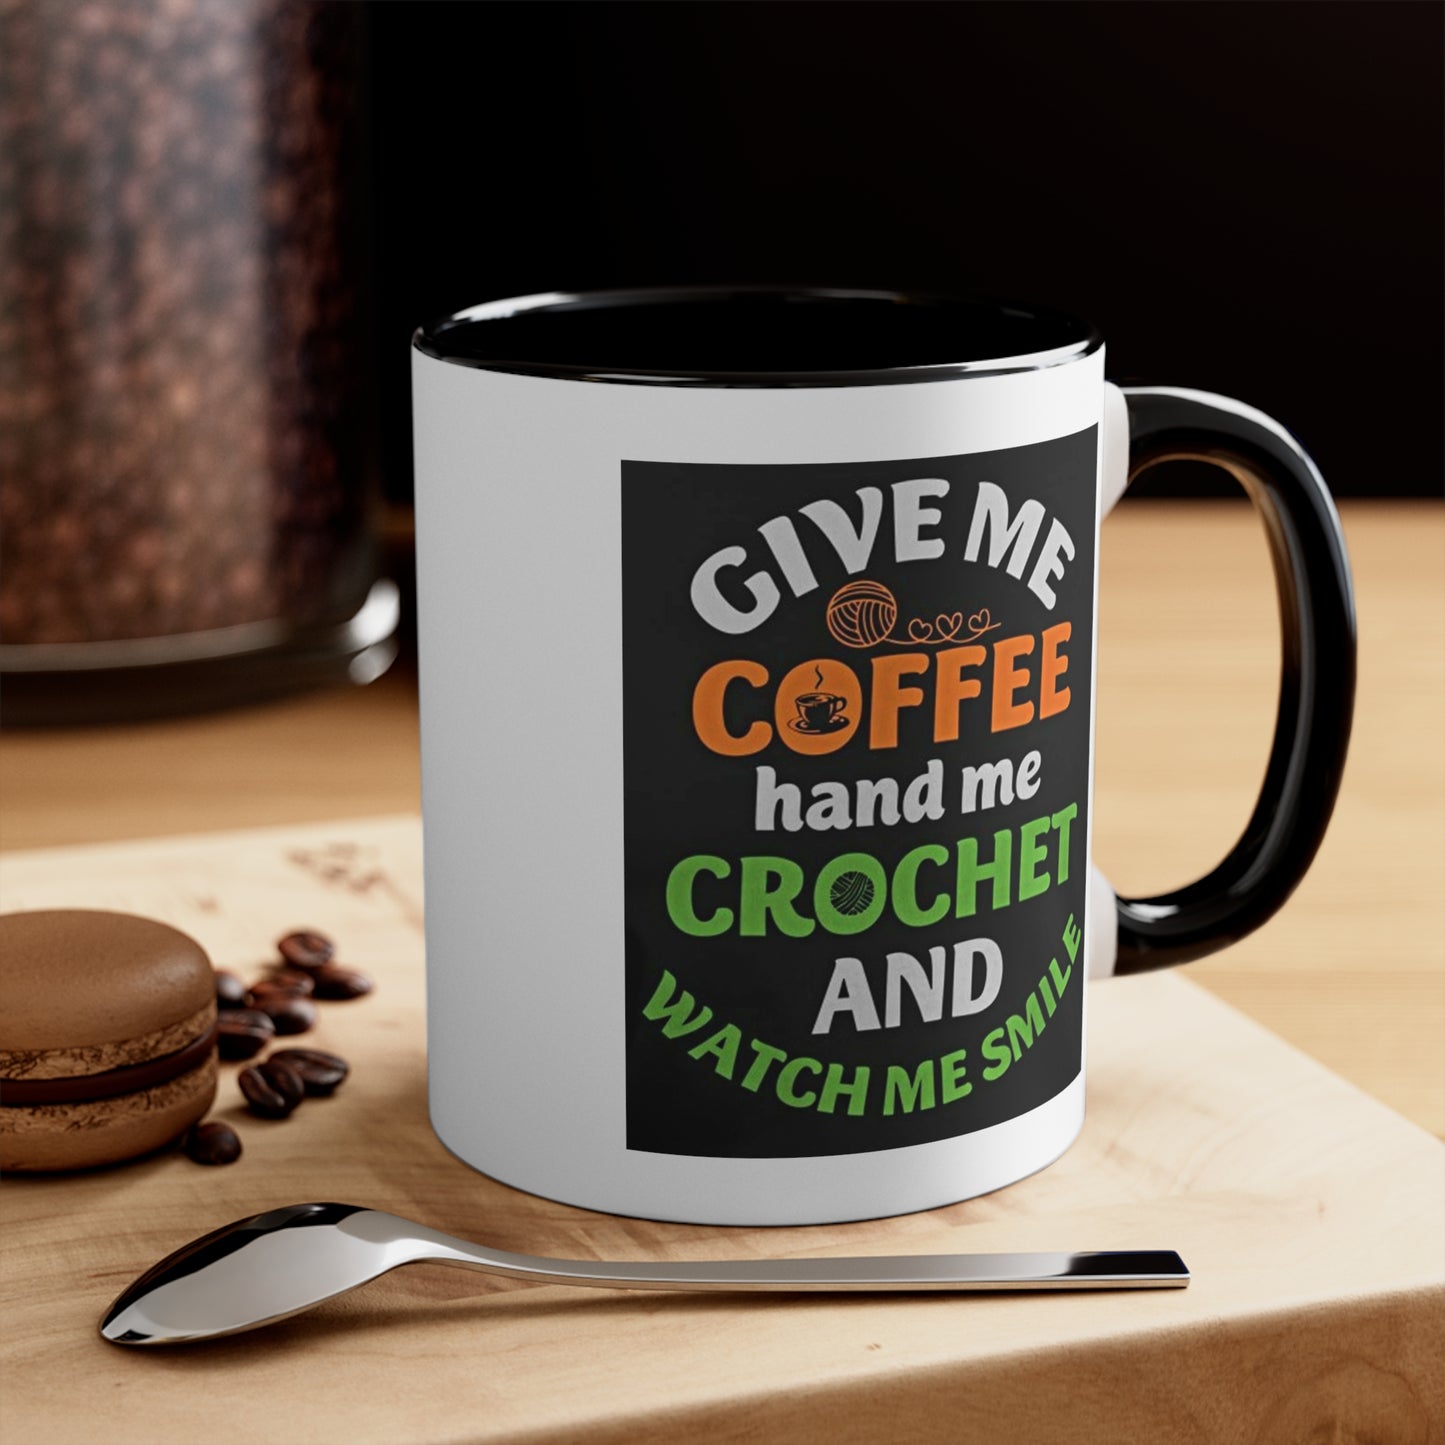 Funny Crochet Humor: Accent Coffee Mug, 11oz